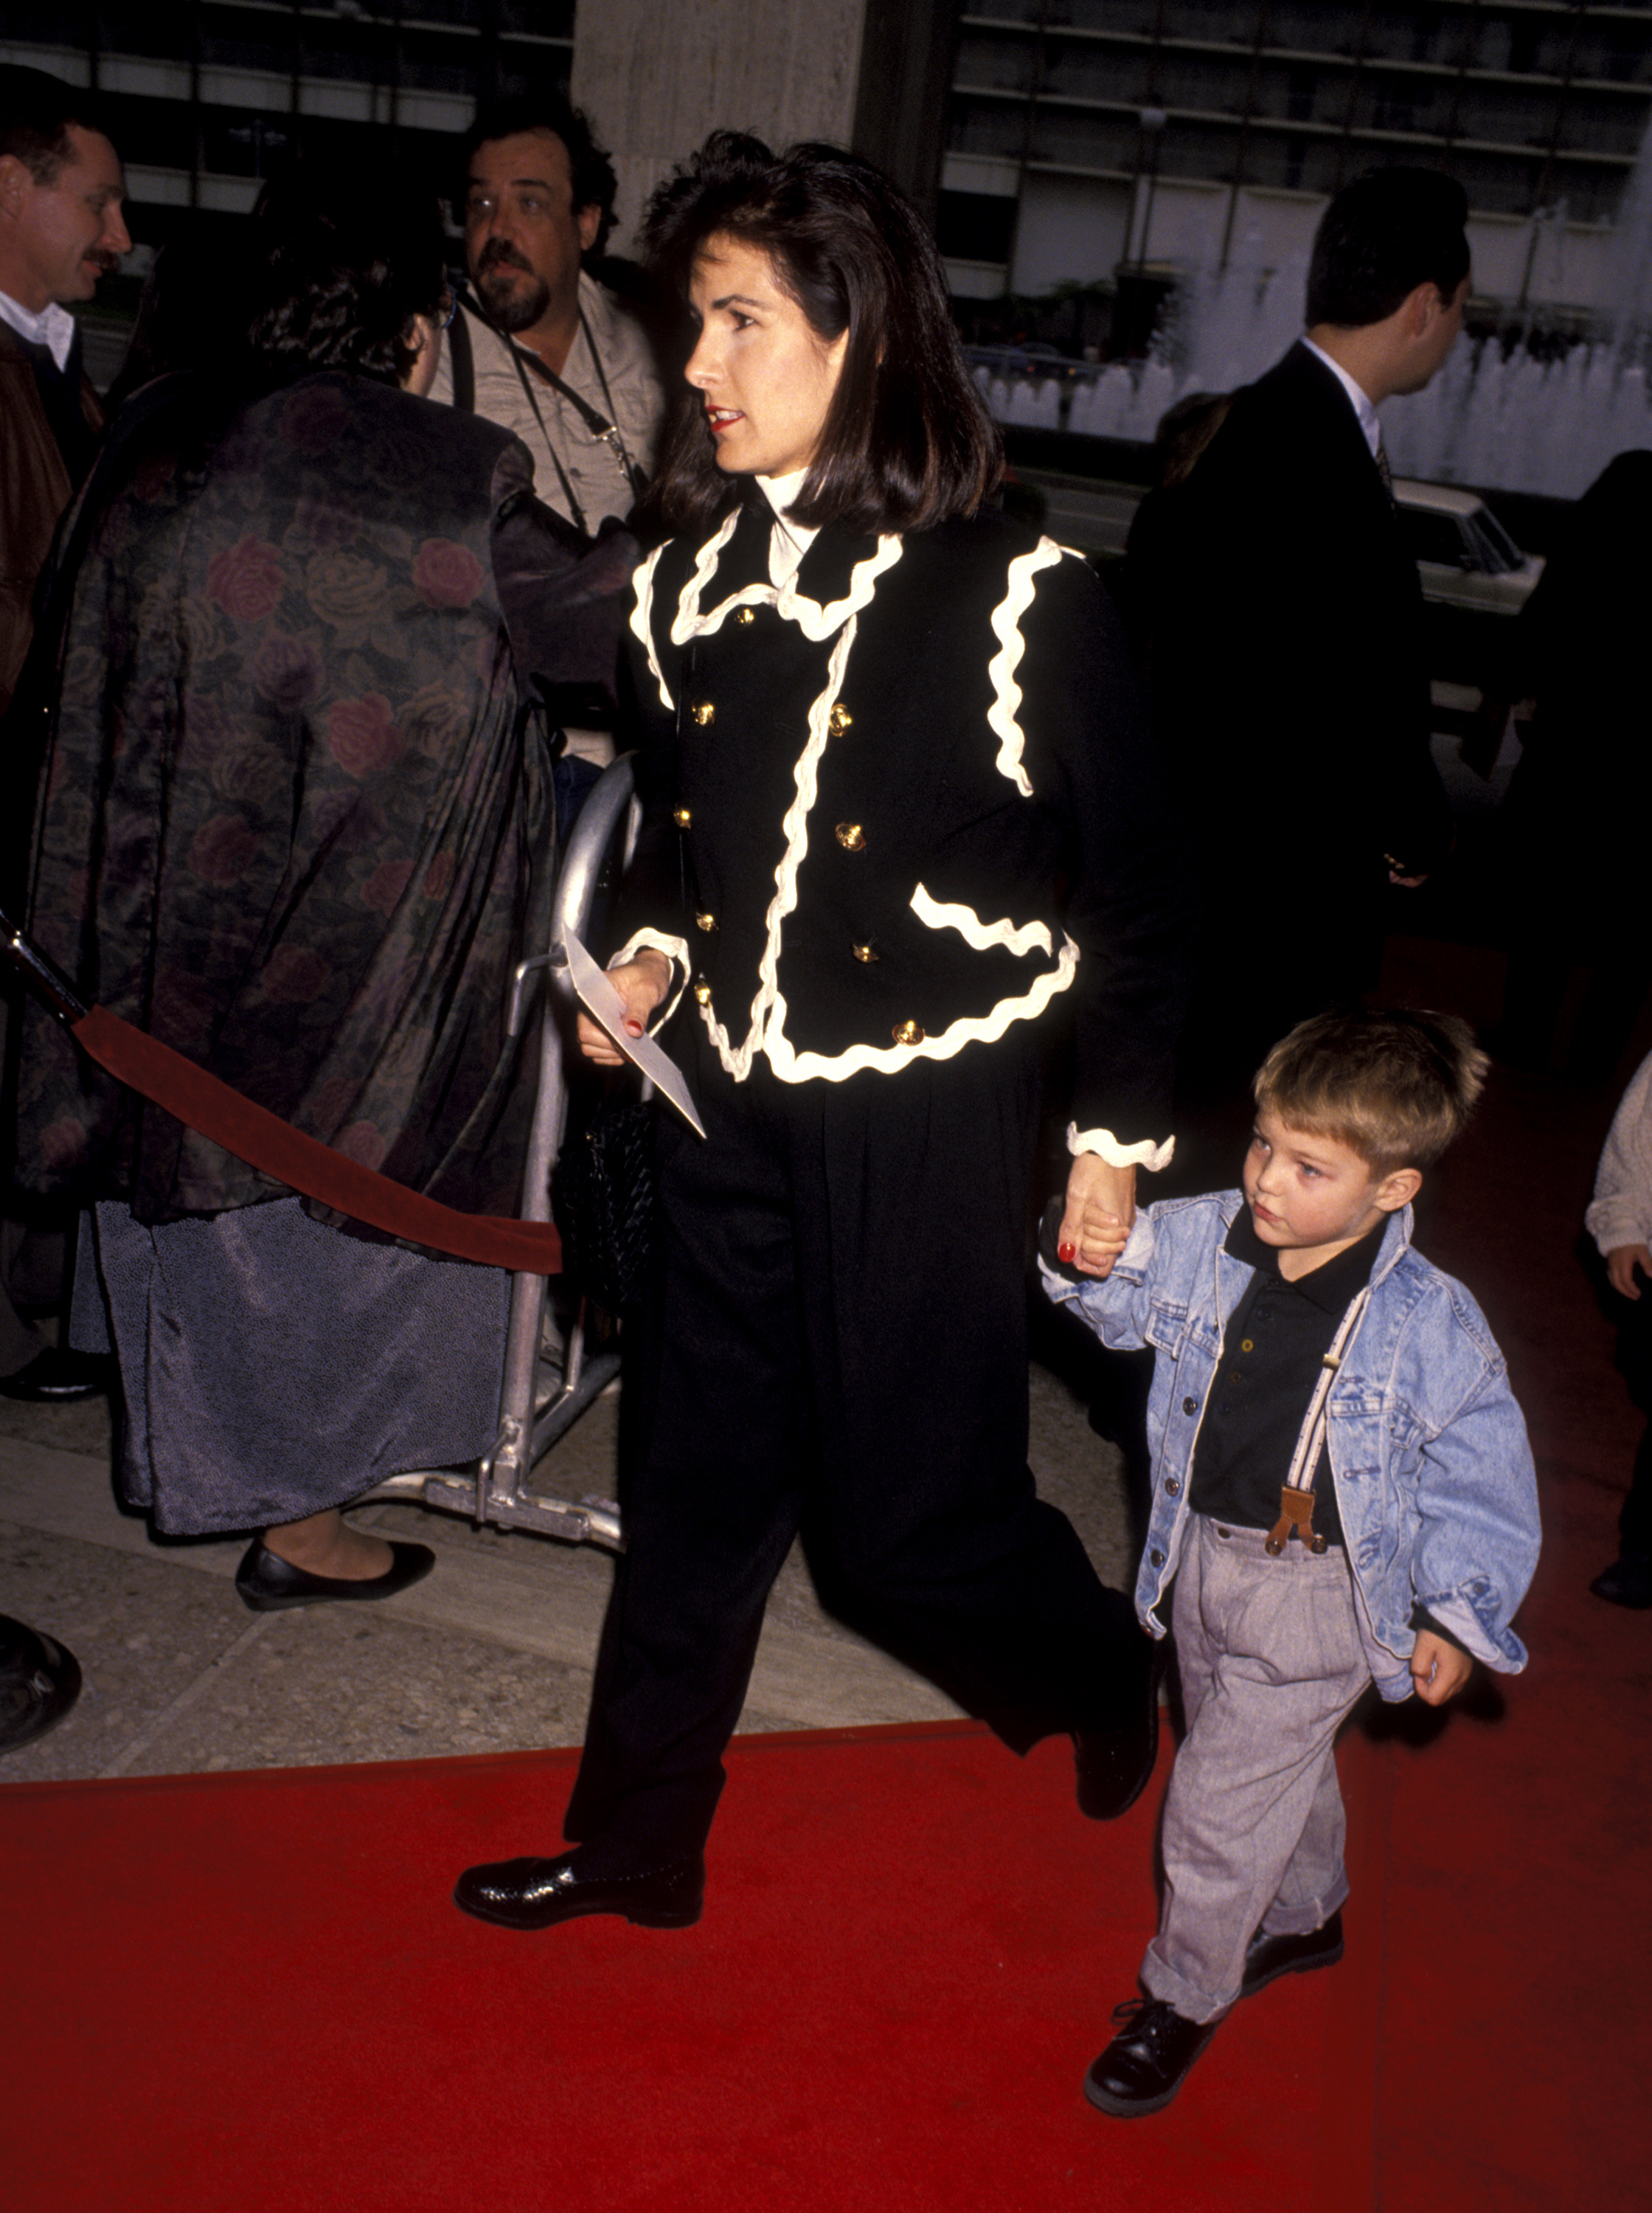 Cindy Silva and Joe Costner in Los Angeles, 11 December 1991 | Source: Getty Images